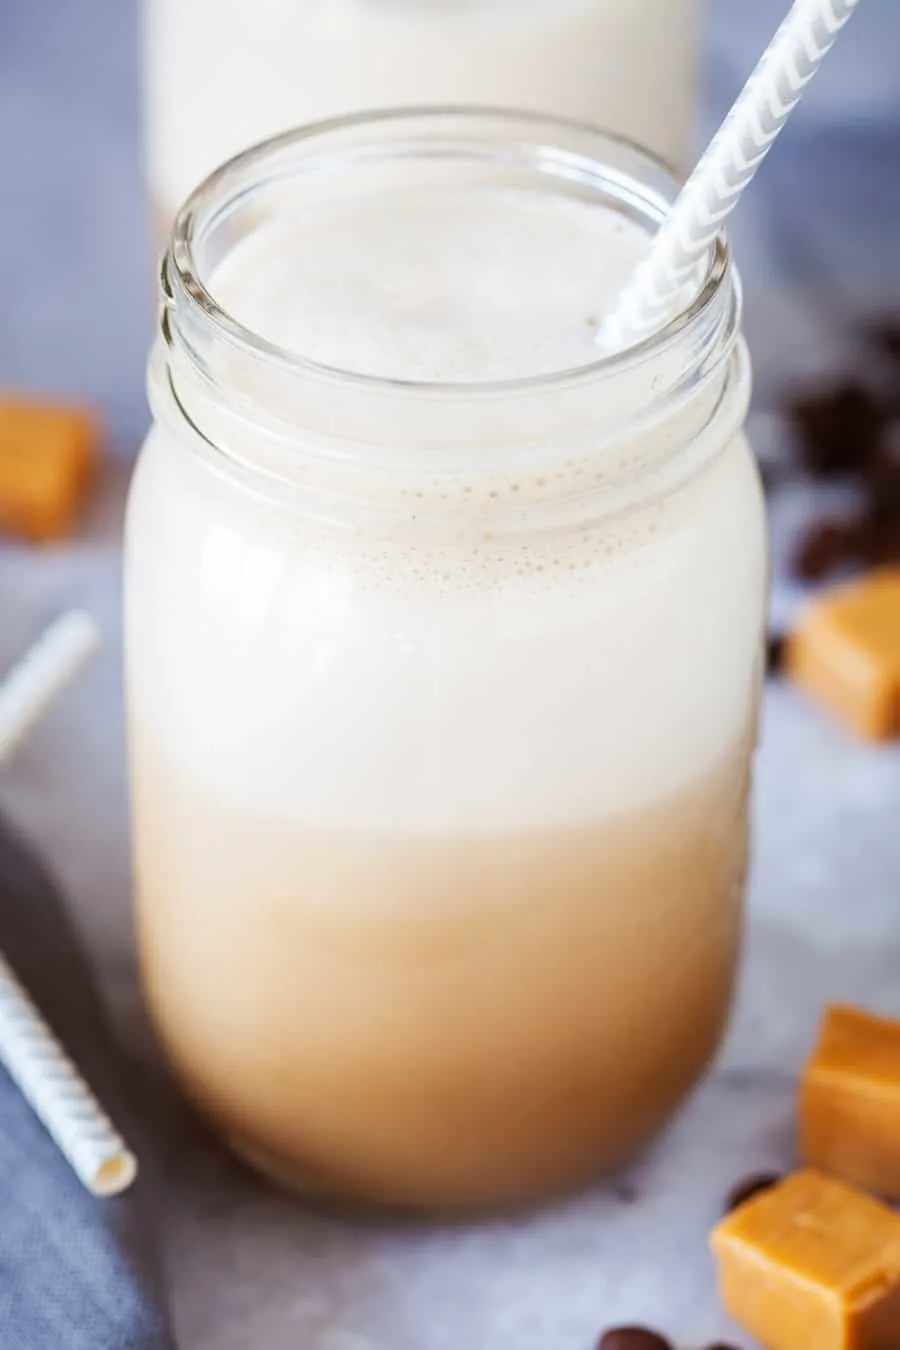 Vanilla and Caramel Iced Coffee (or caramel vanilla!) – The